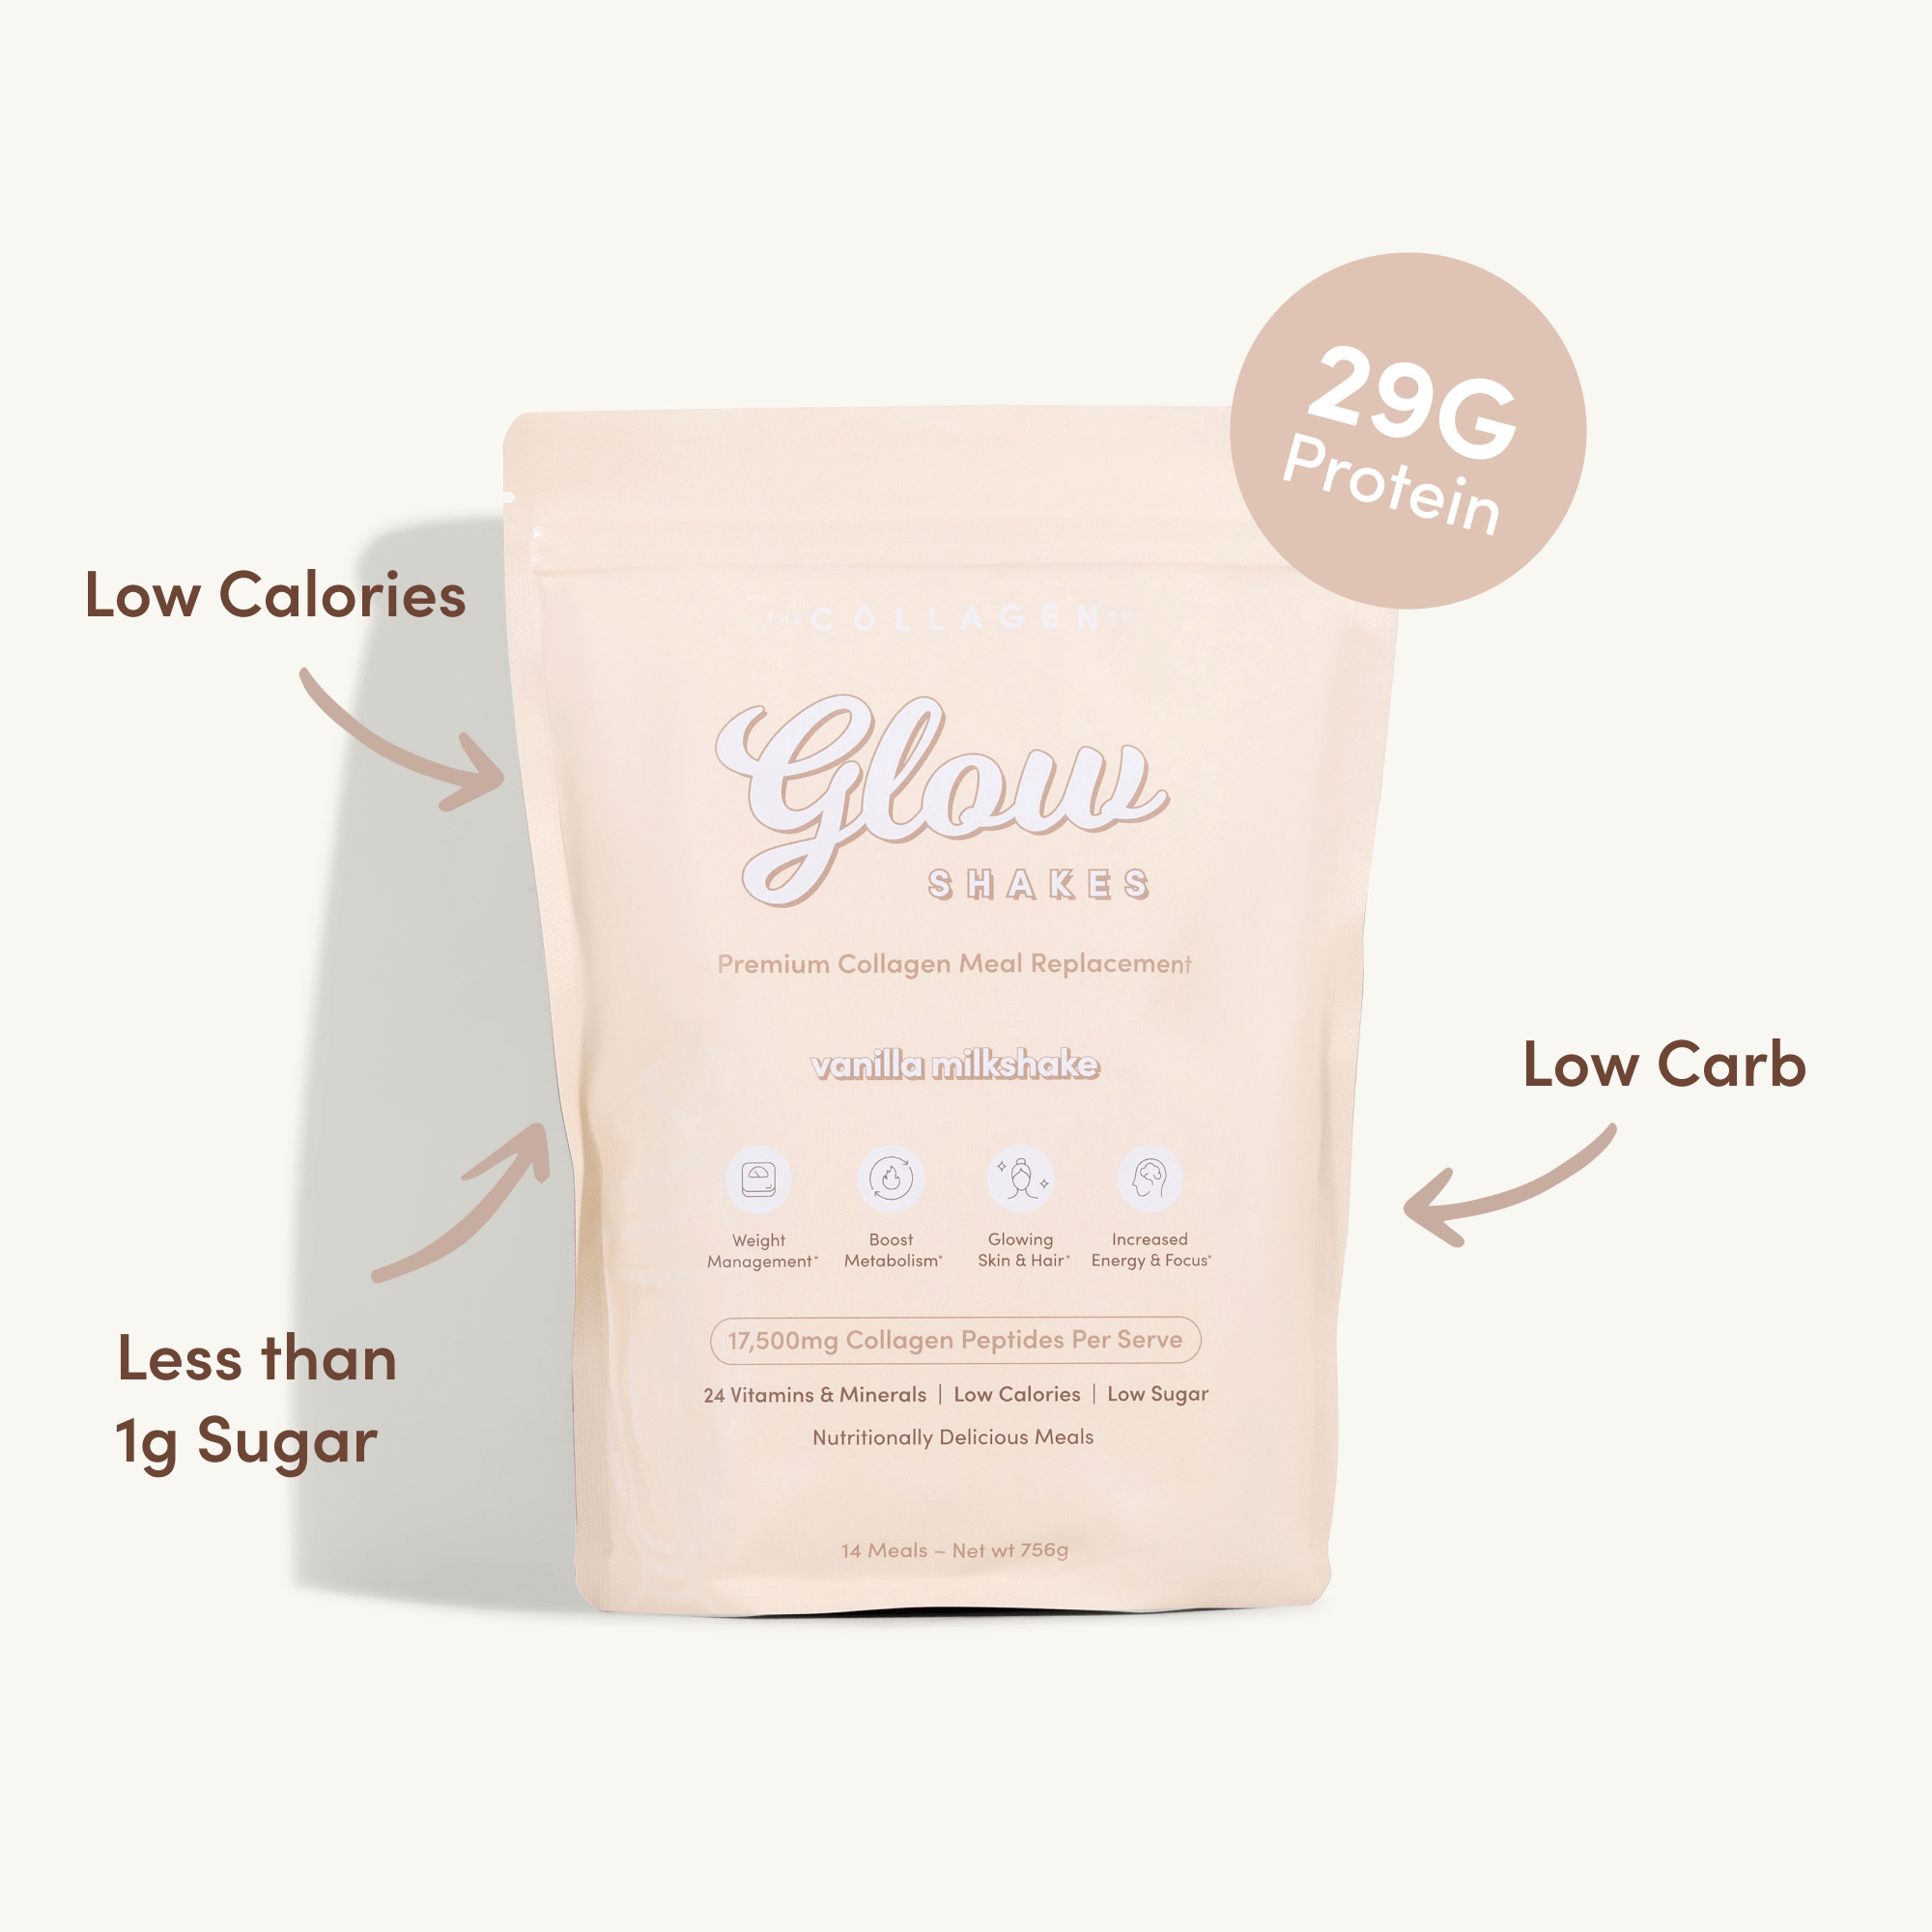 Vanilla Milkshake Collagen Meal Replacement - 756g - The Collagen Co.